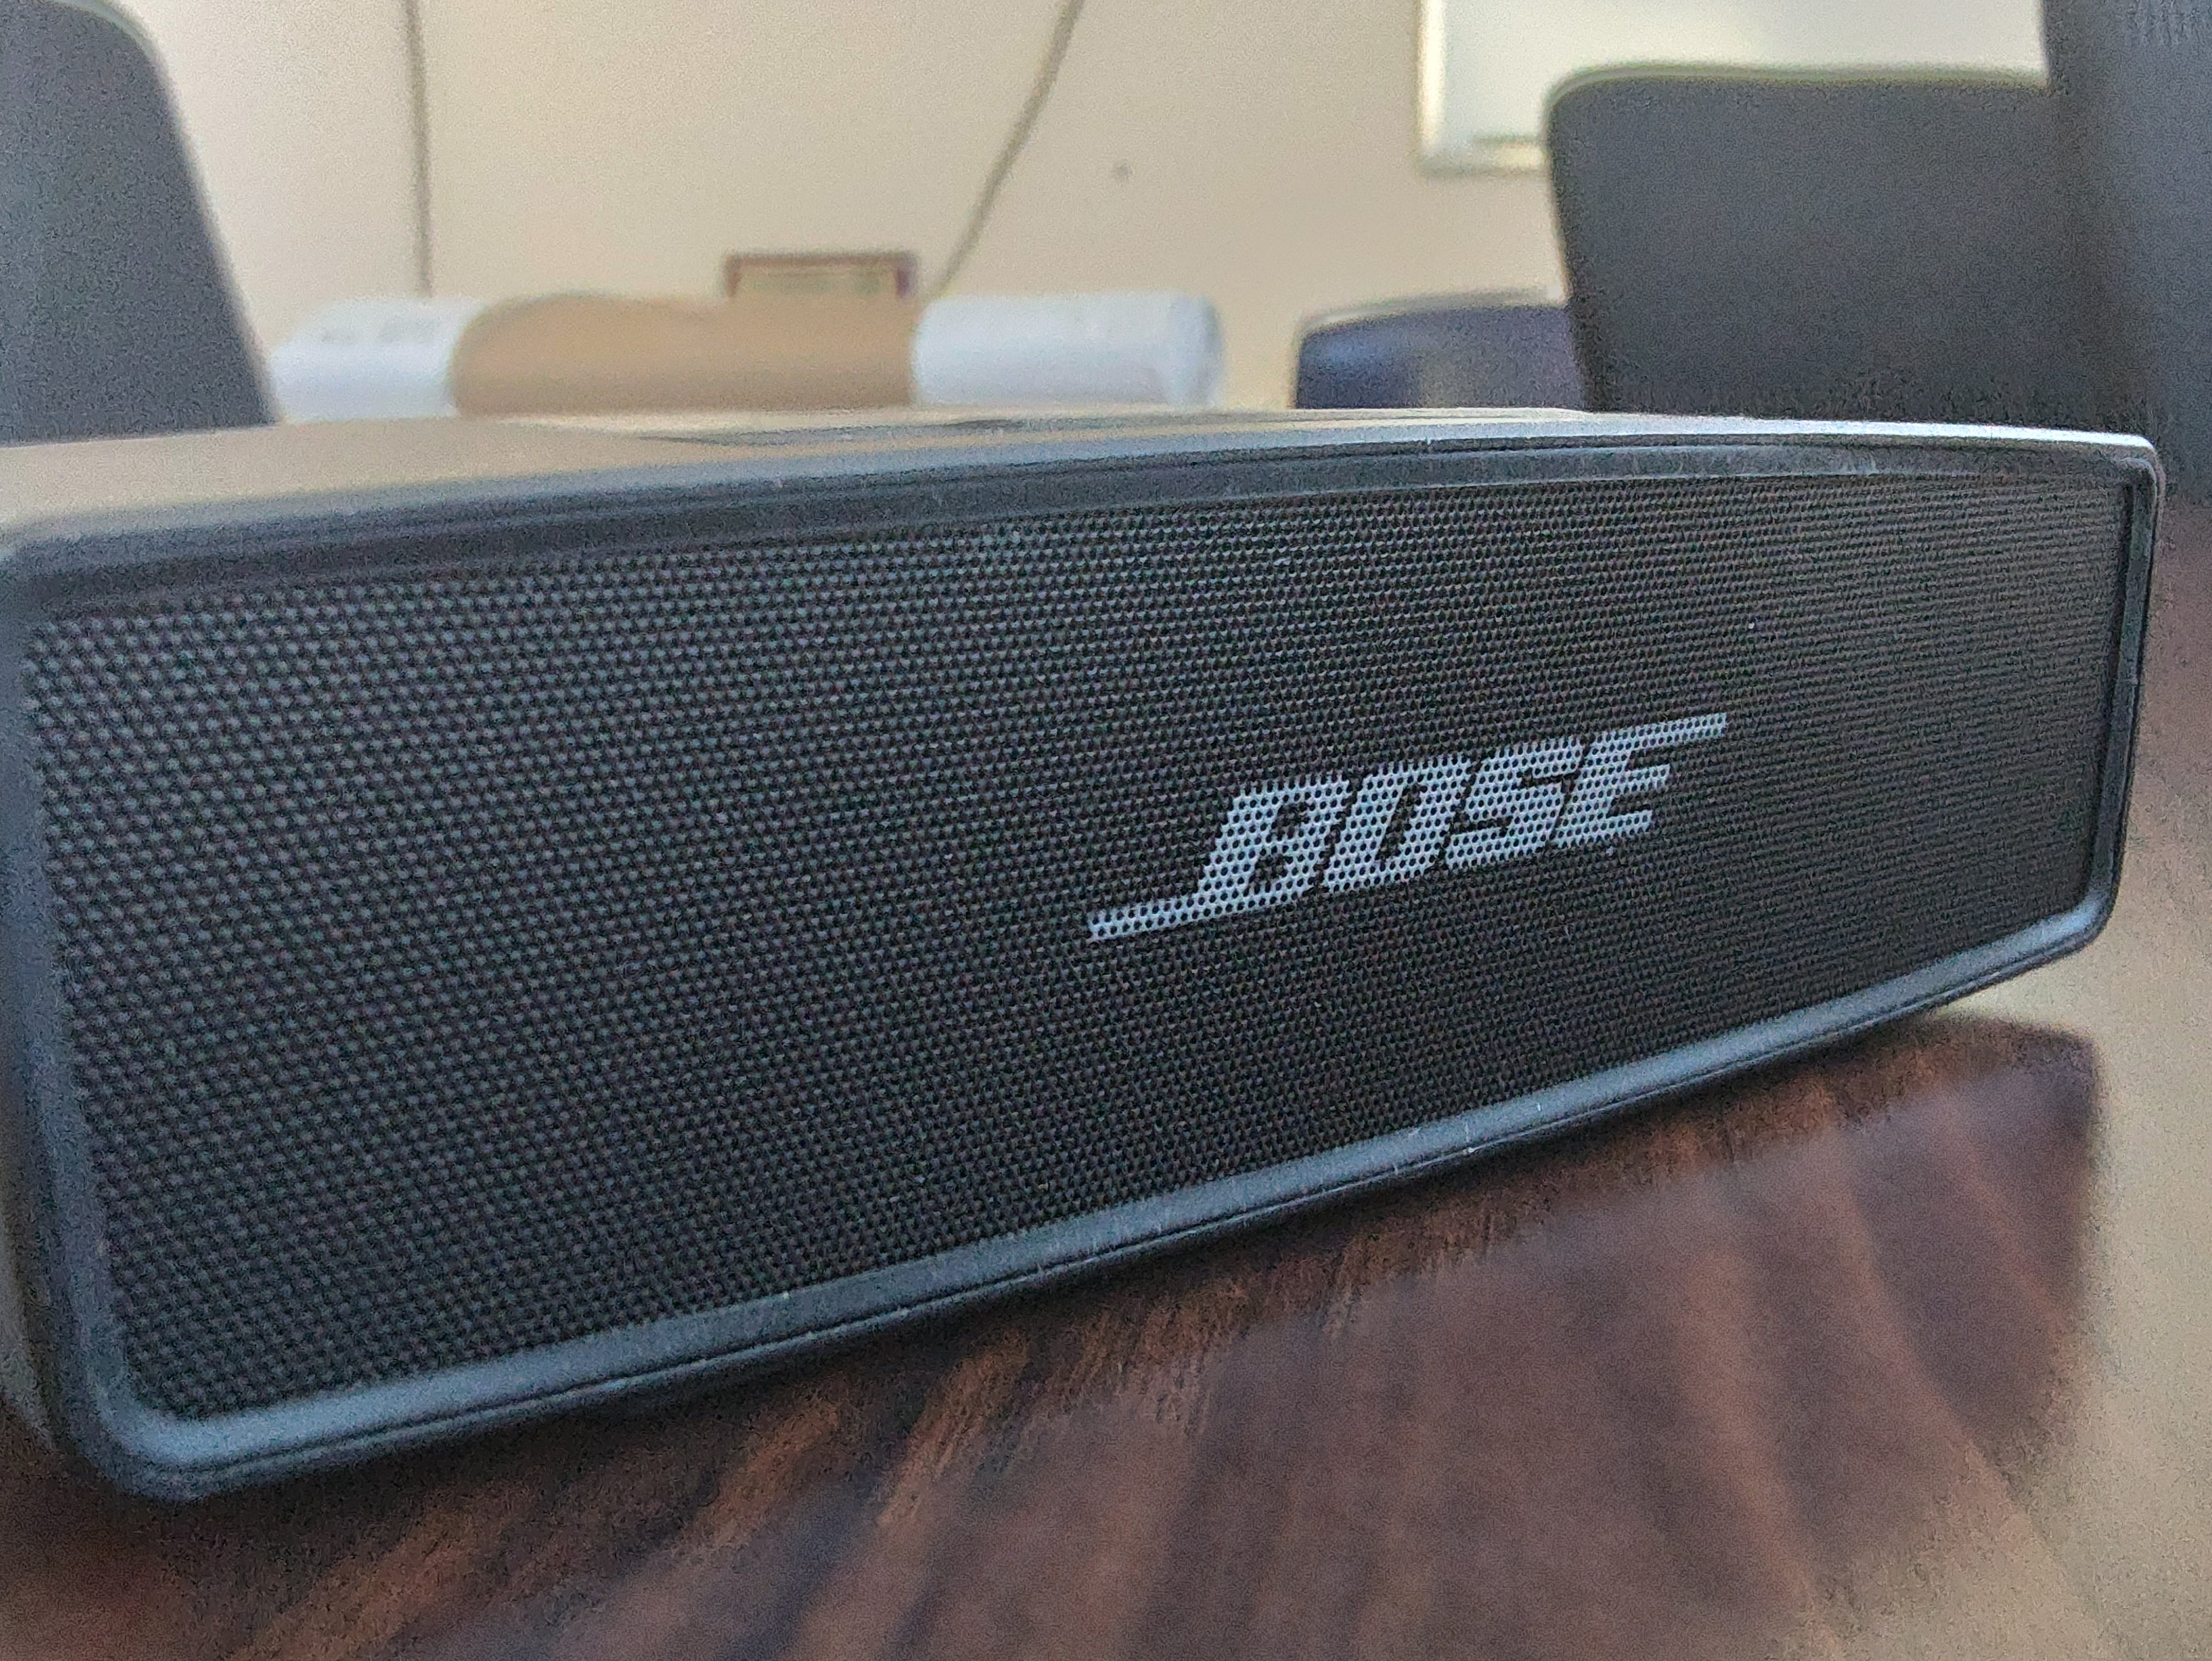 Bose SoundLink Mini II review